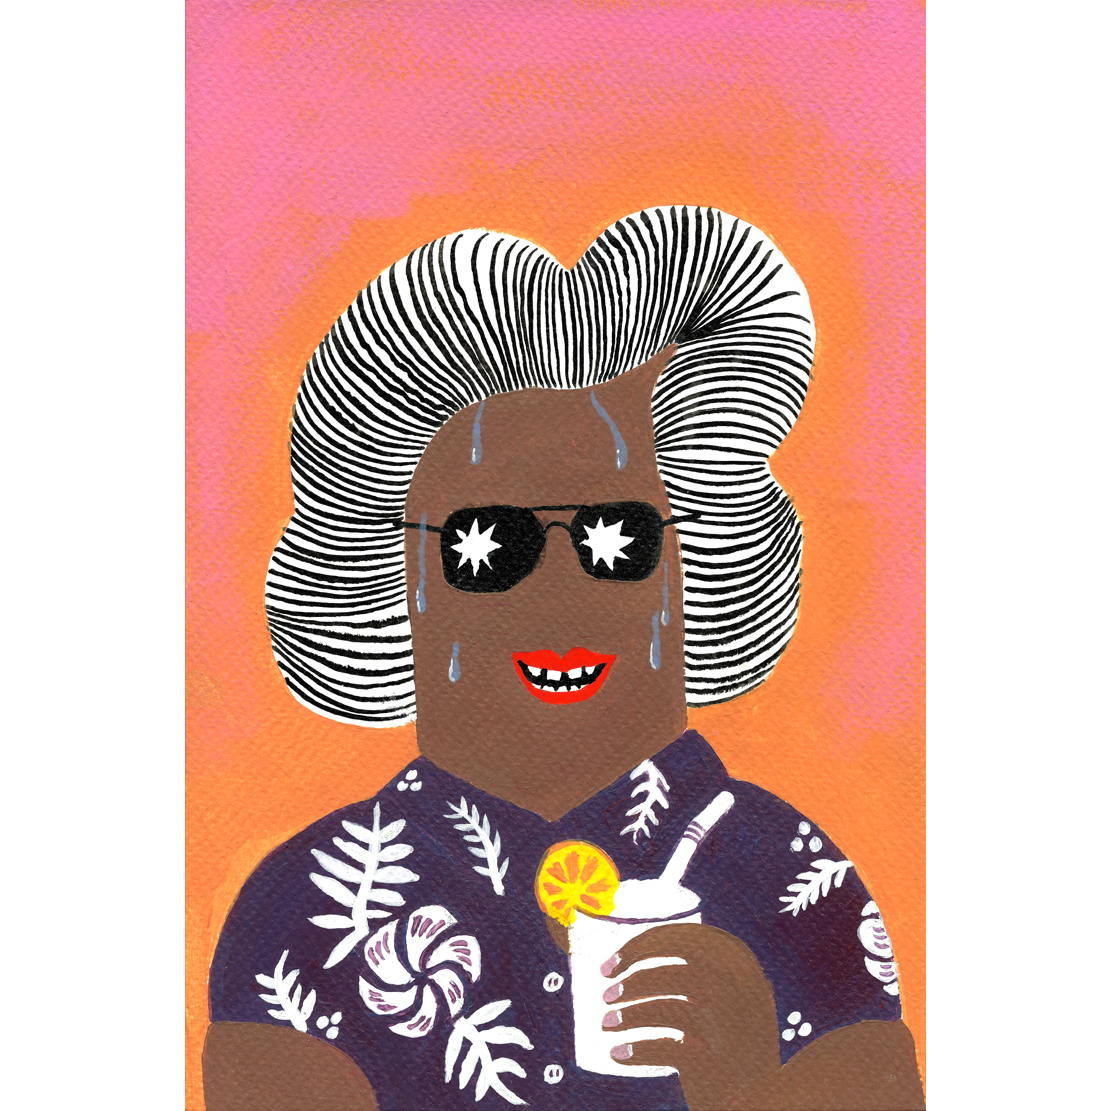 Homme Chemise Hawaienne, 2017, Tinte, Acryl auf Papier, 15,4 x 23,5 cm